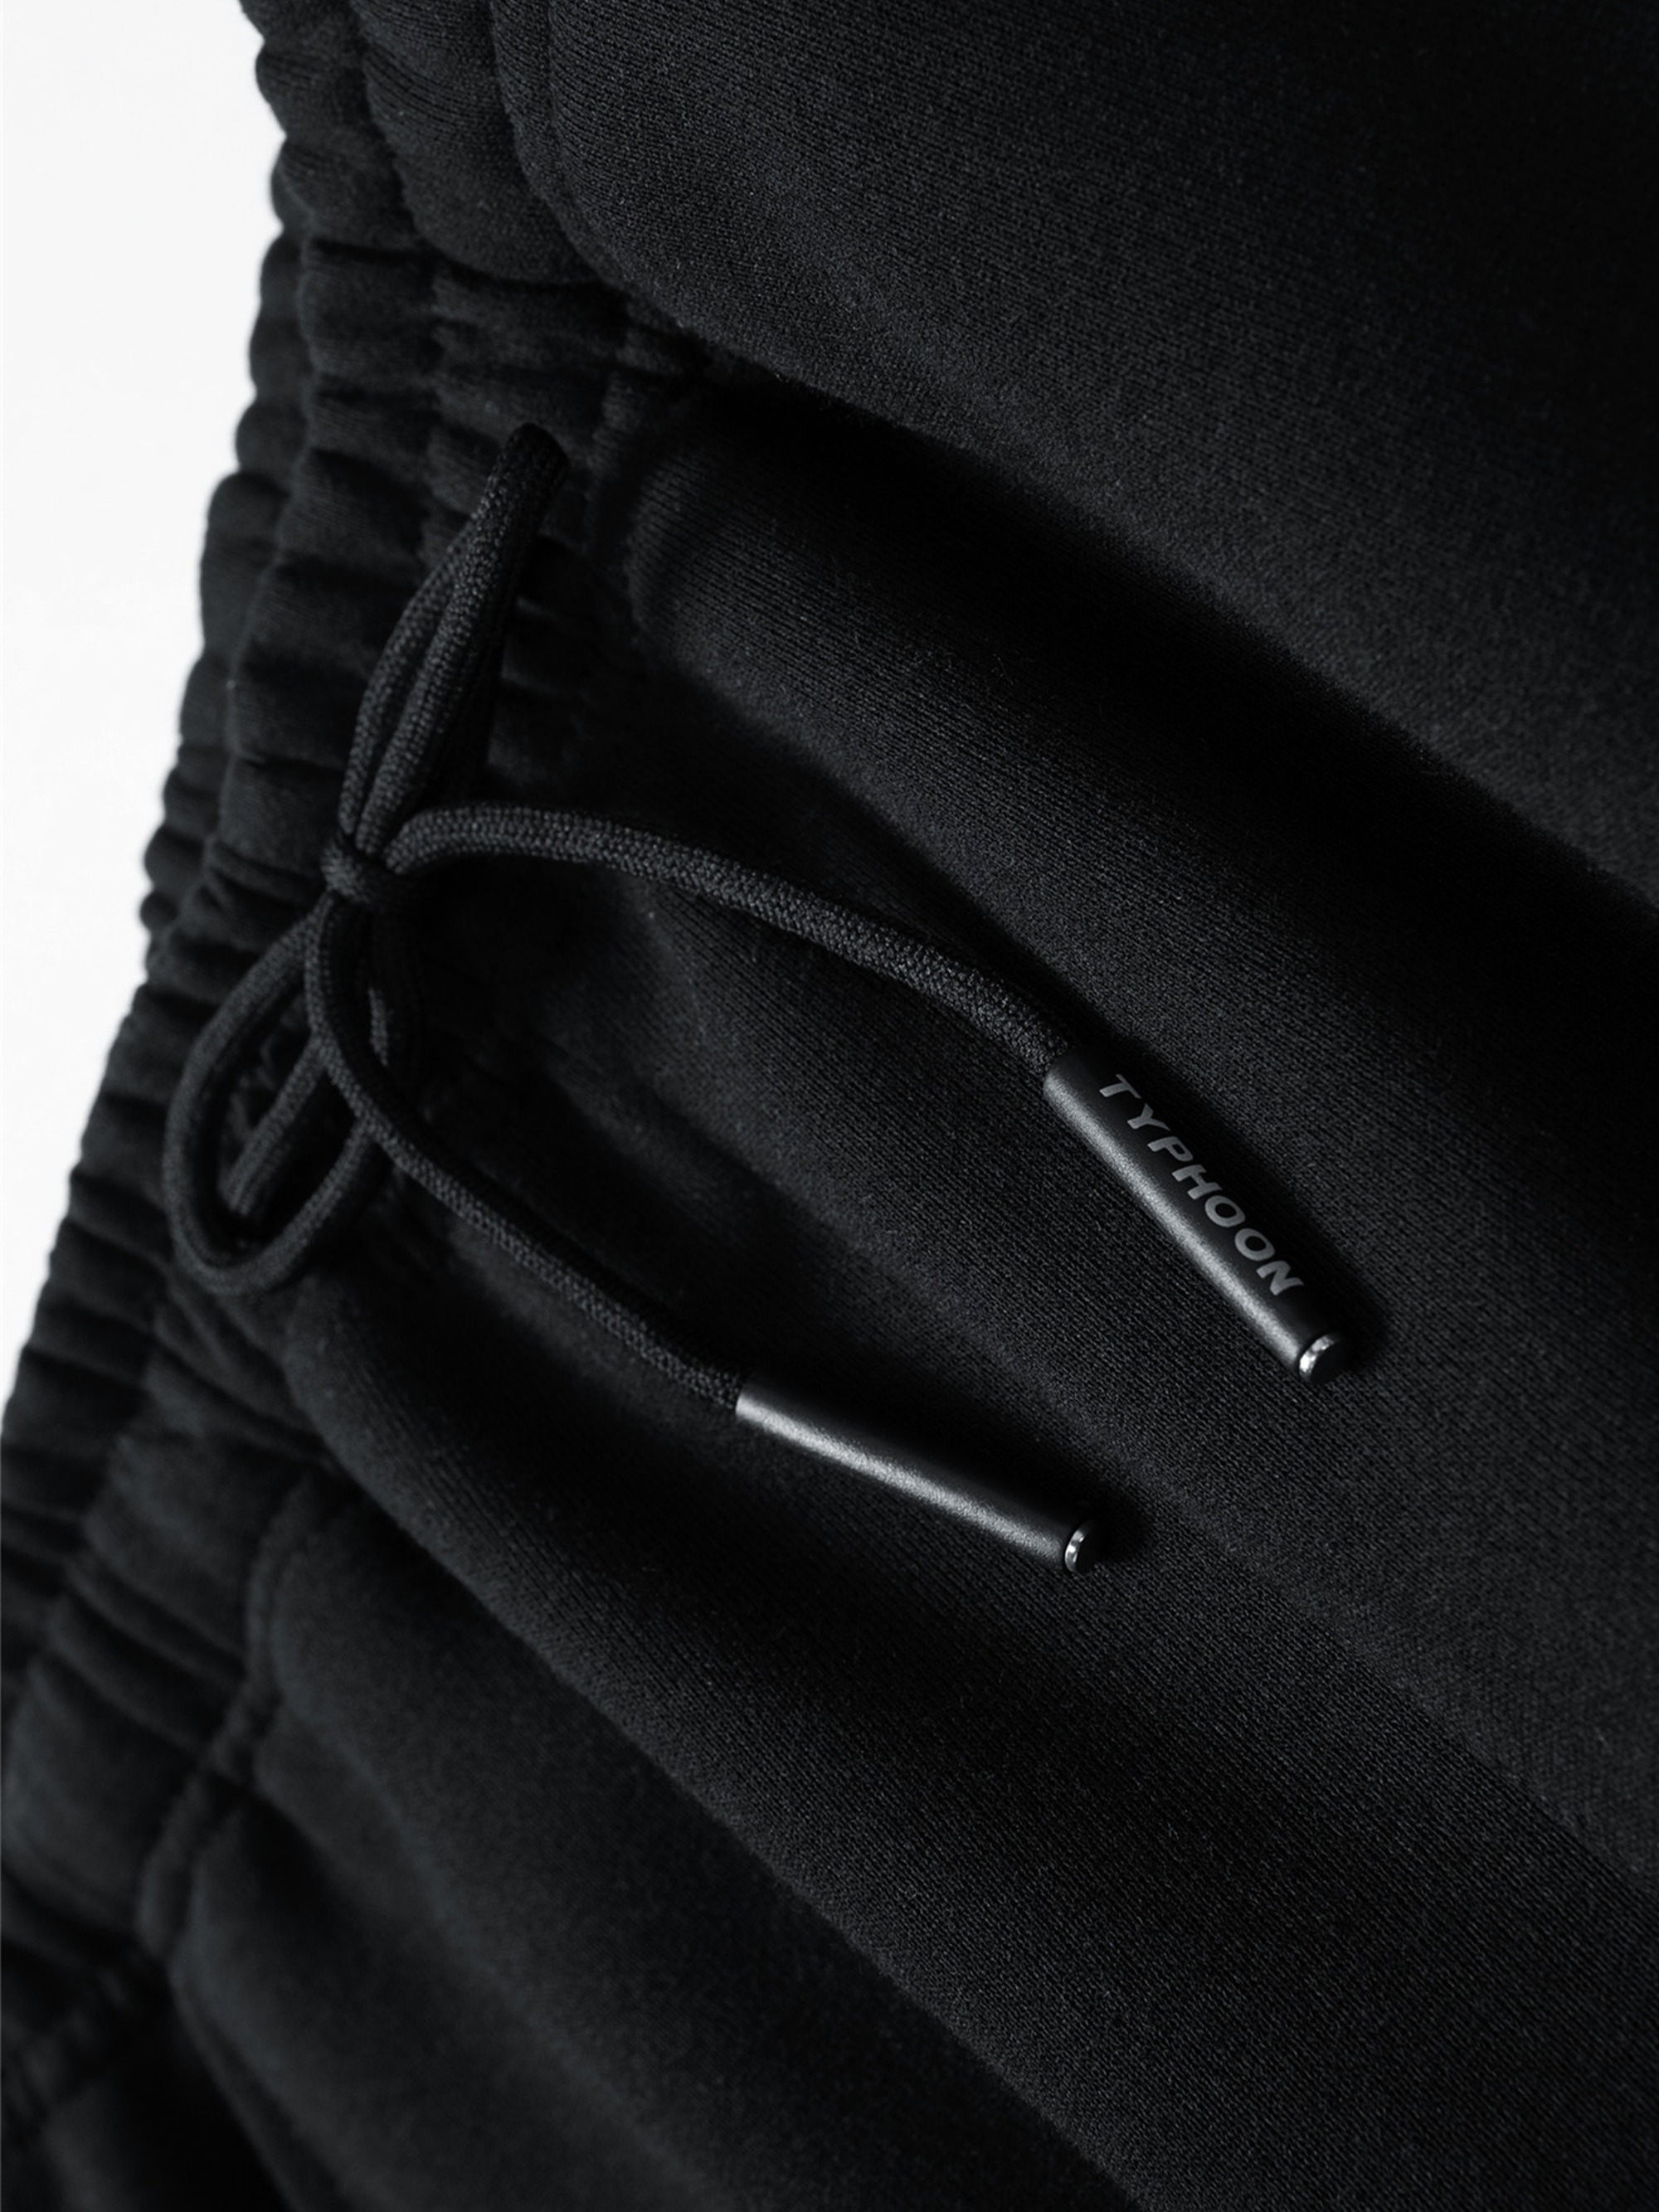 Black Drawstring Sweatpants